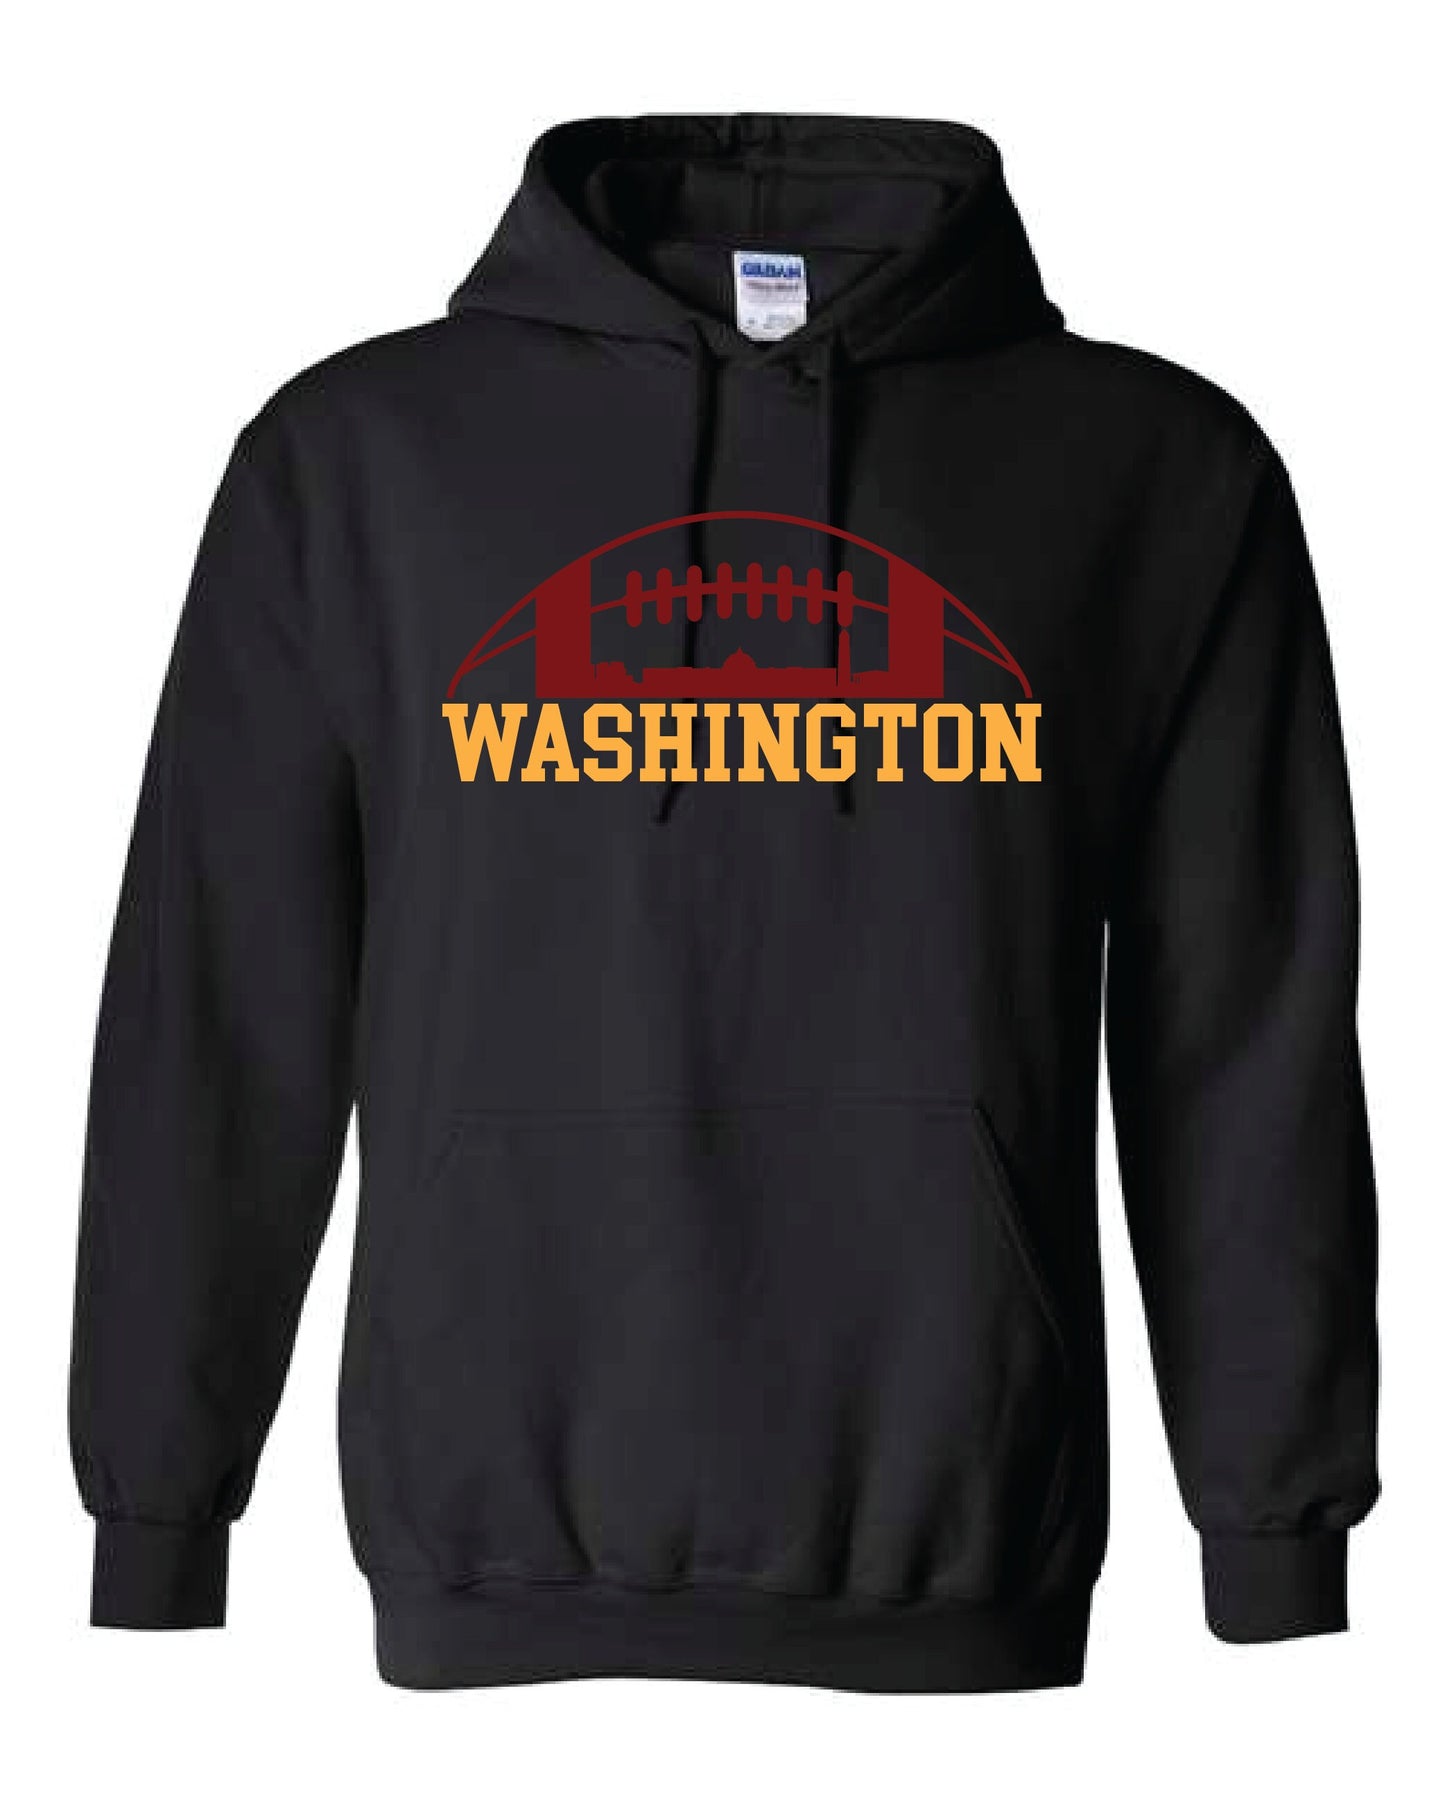 Washington DC Football Skyline Hoodie - Football Fans Hoodie - Football Fan Gift - DC Fan Gift - Rep your football team - Rep your City